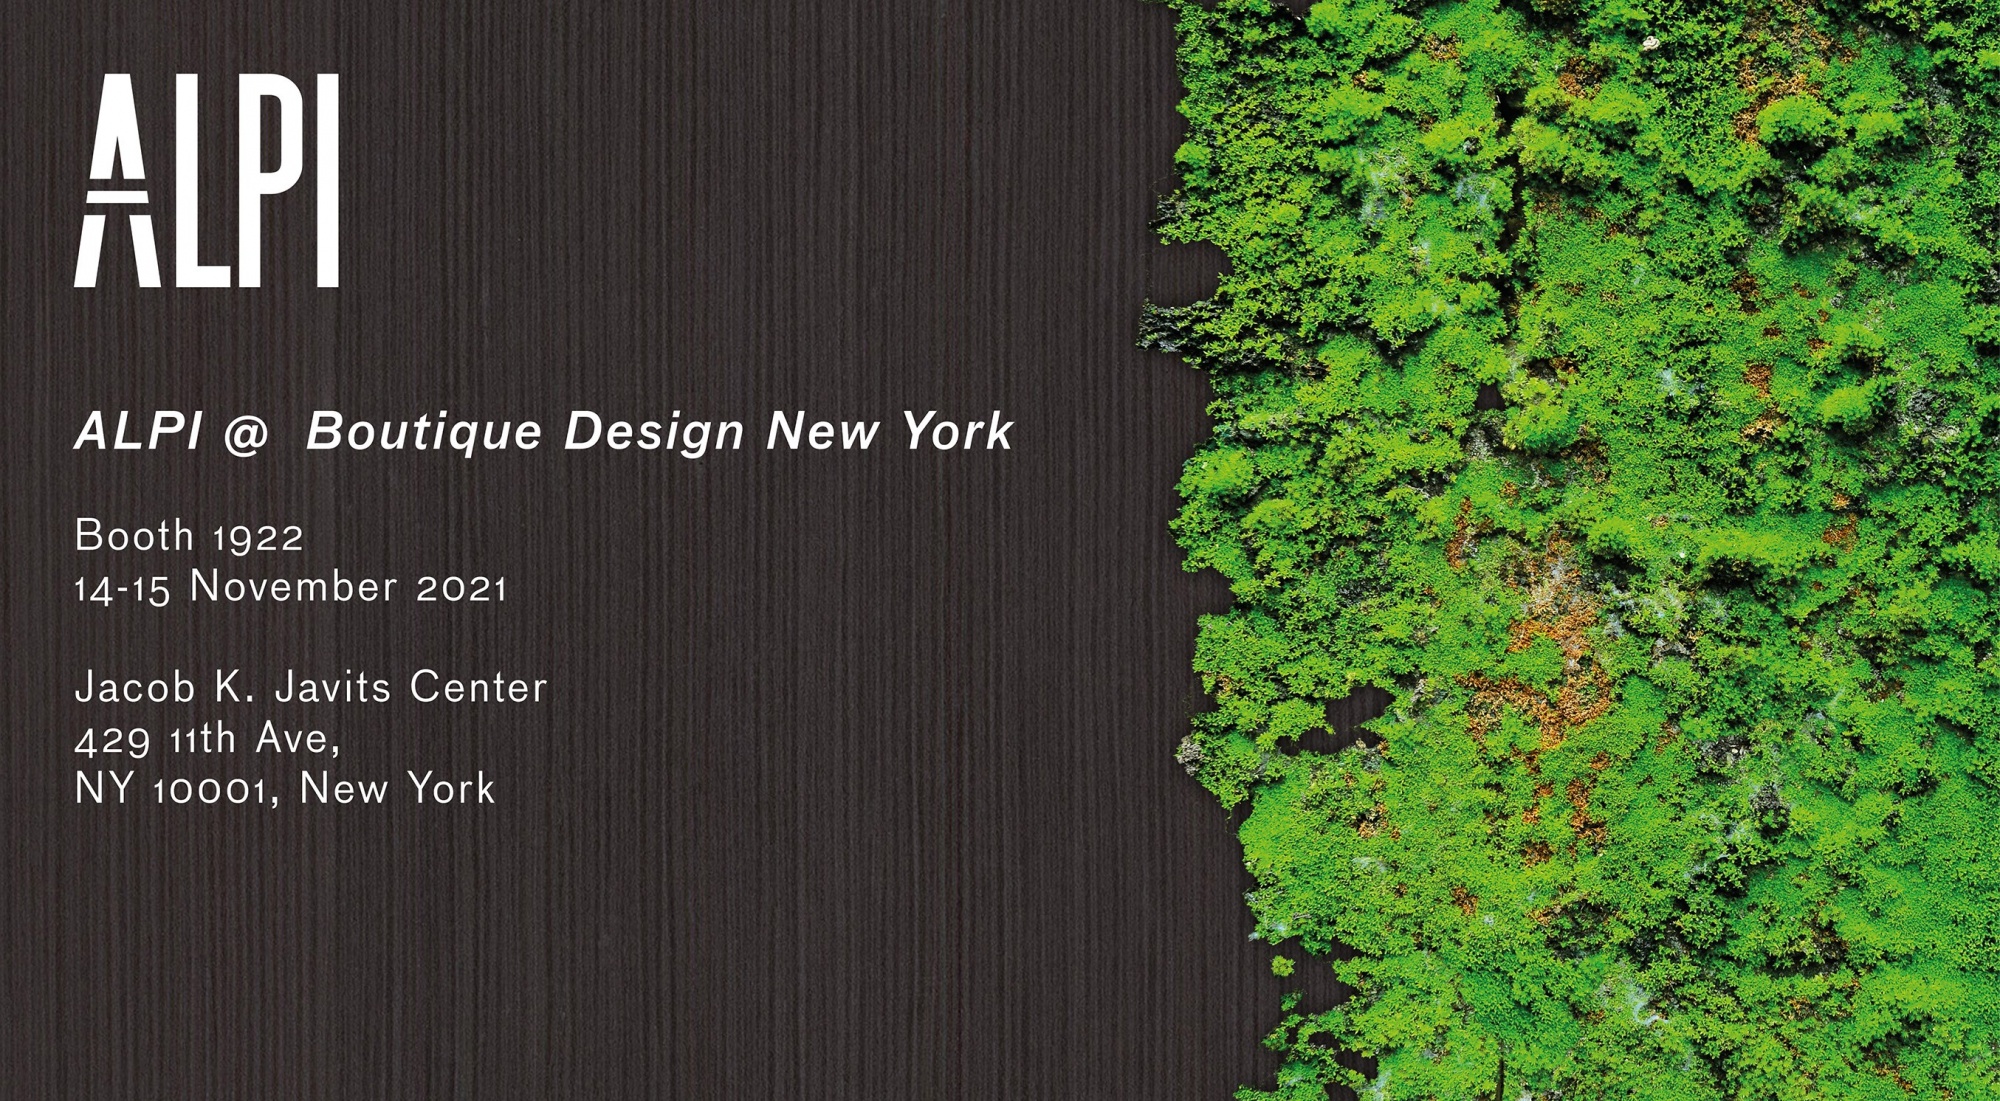 ALPI @Boutique Design New York 2021